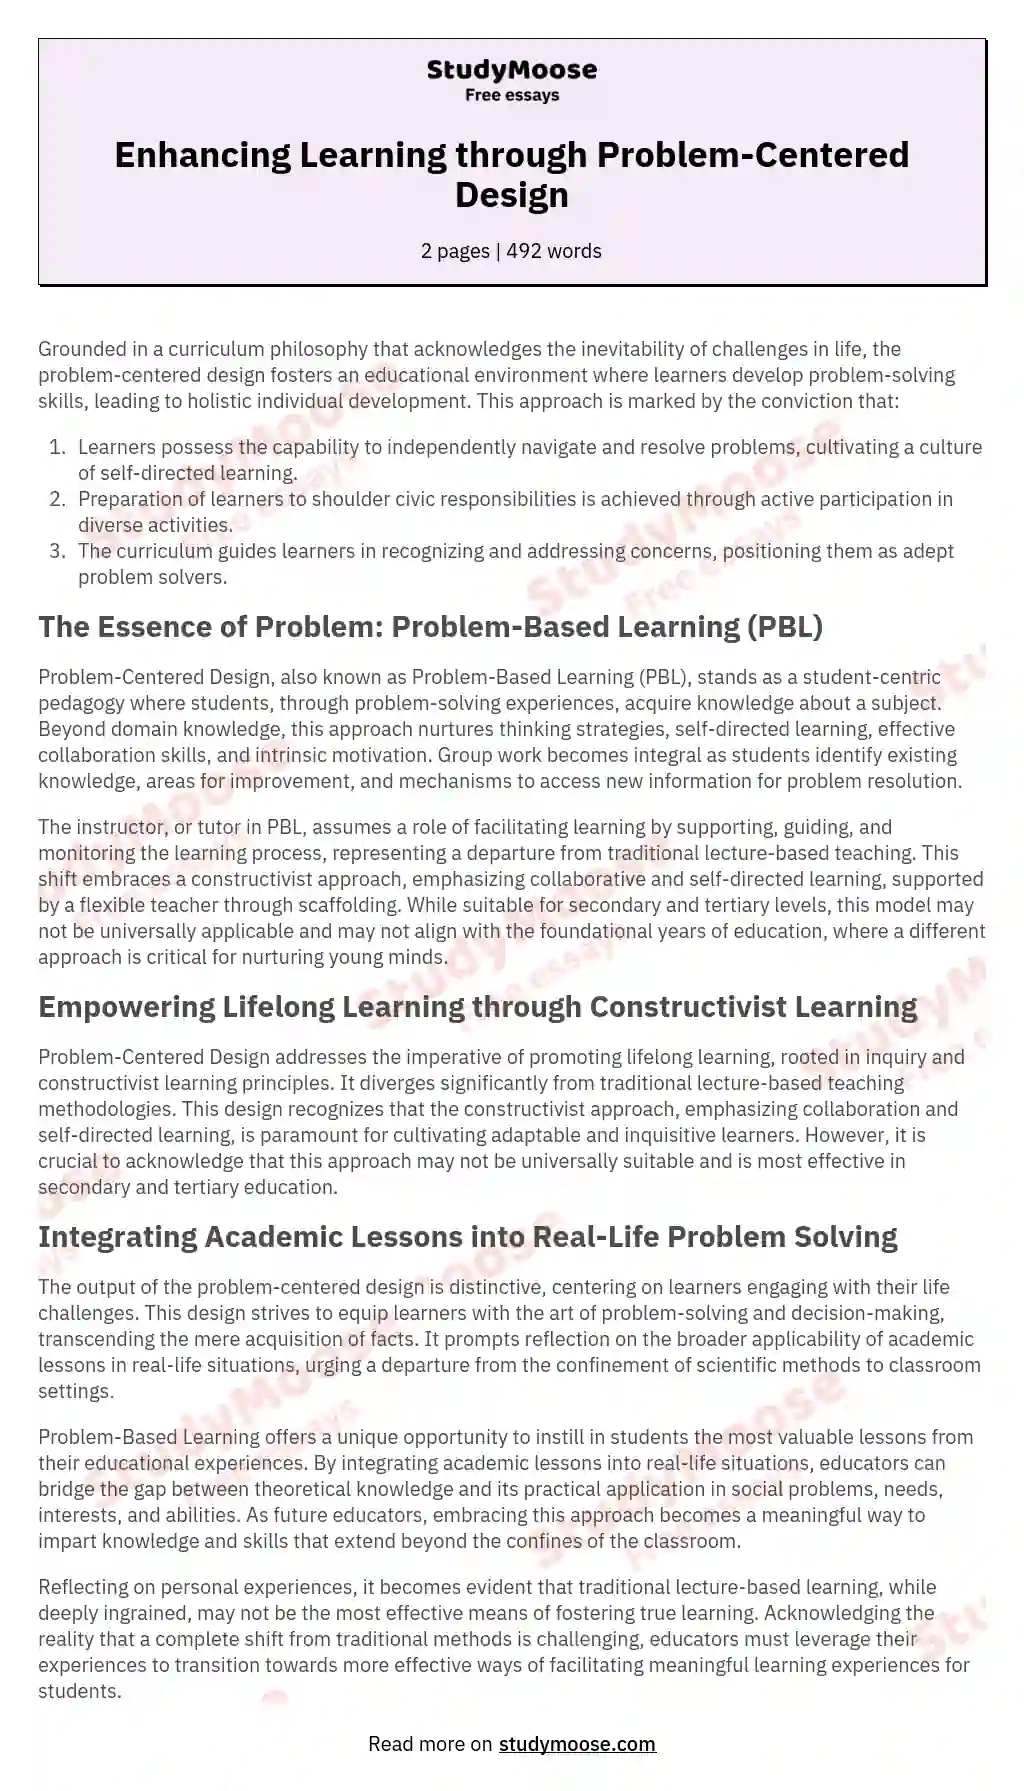 Enhancing Learning through Problem-Centered Design essay